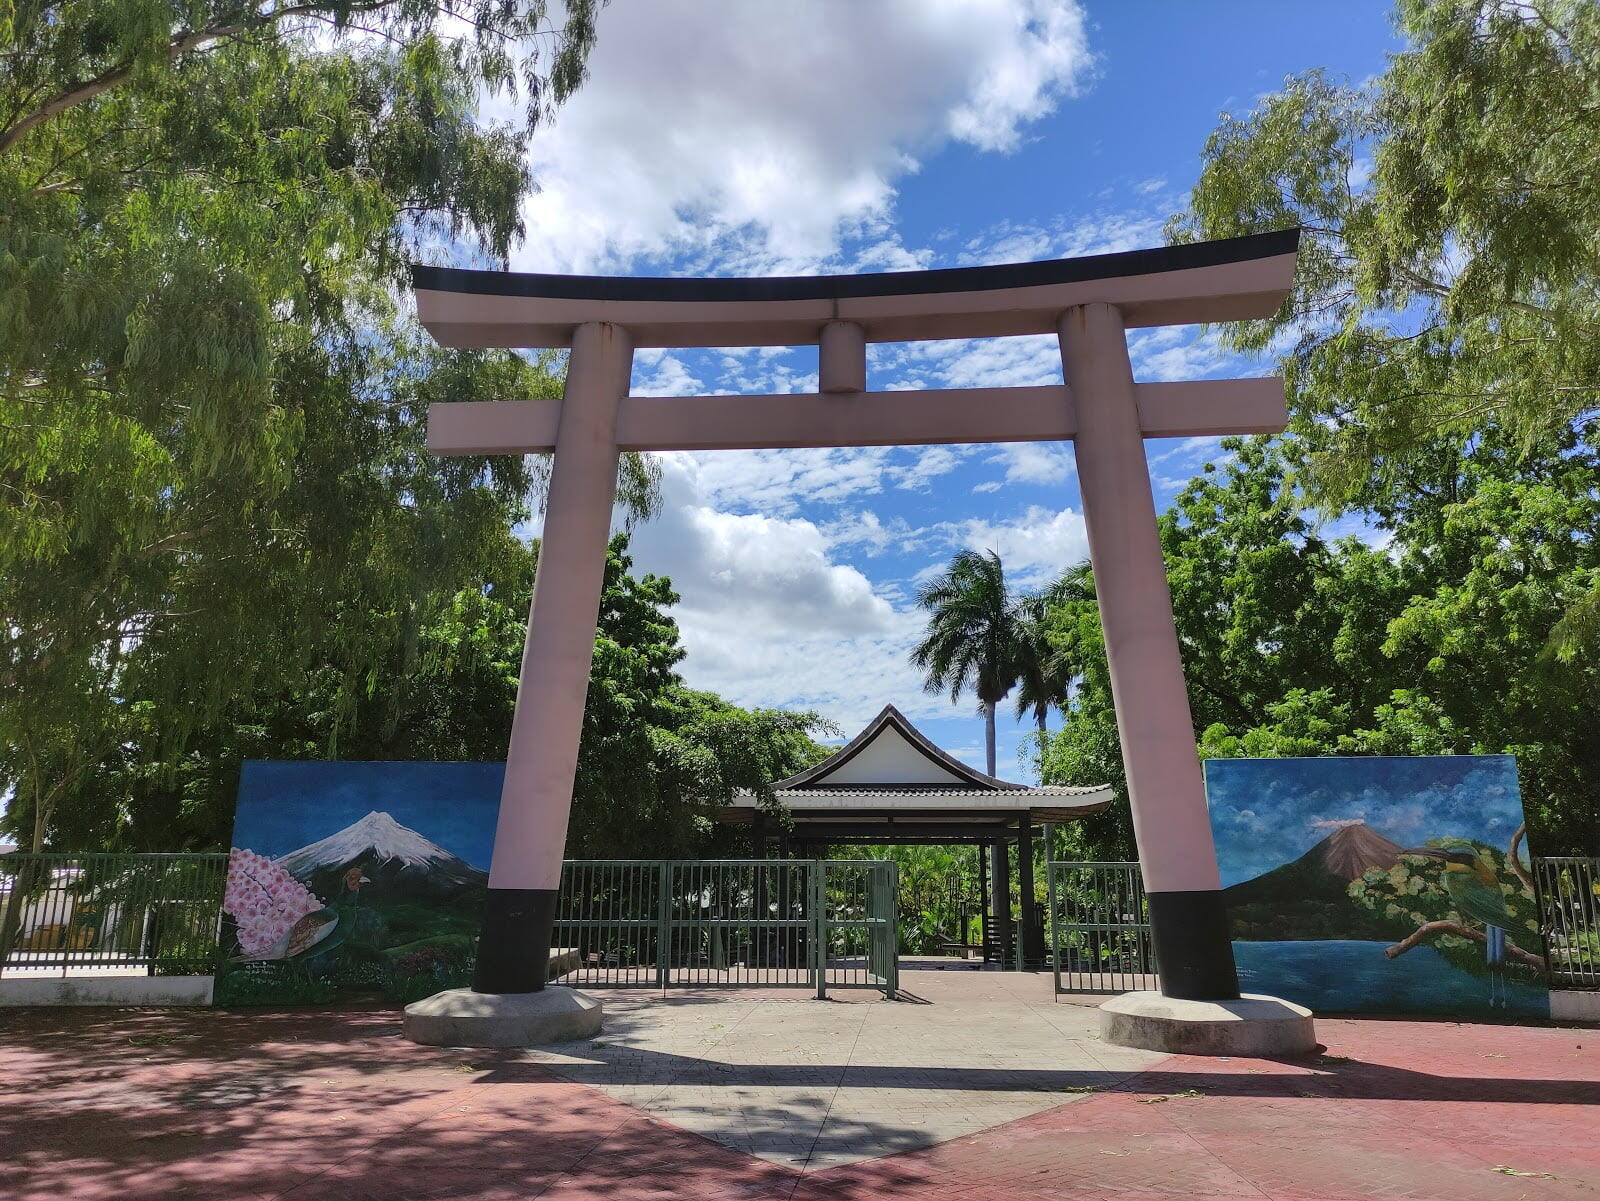 Japón Nicaragua Park